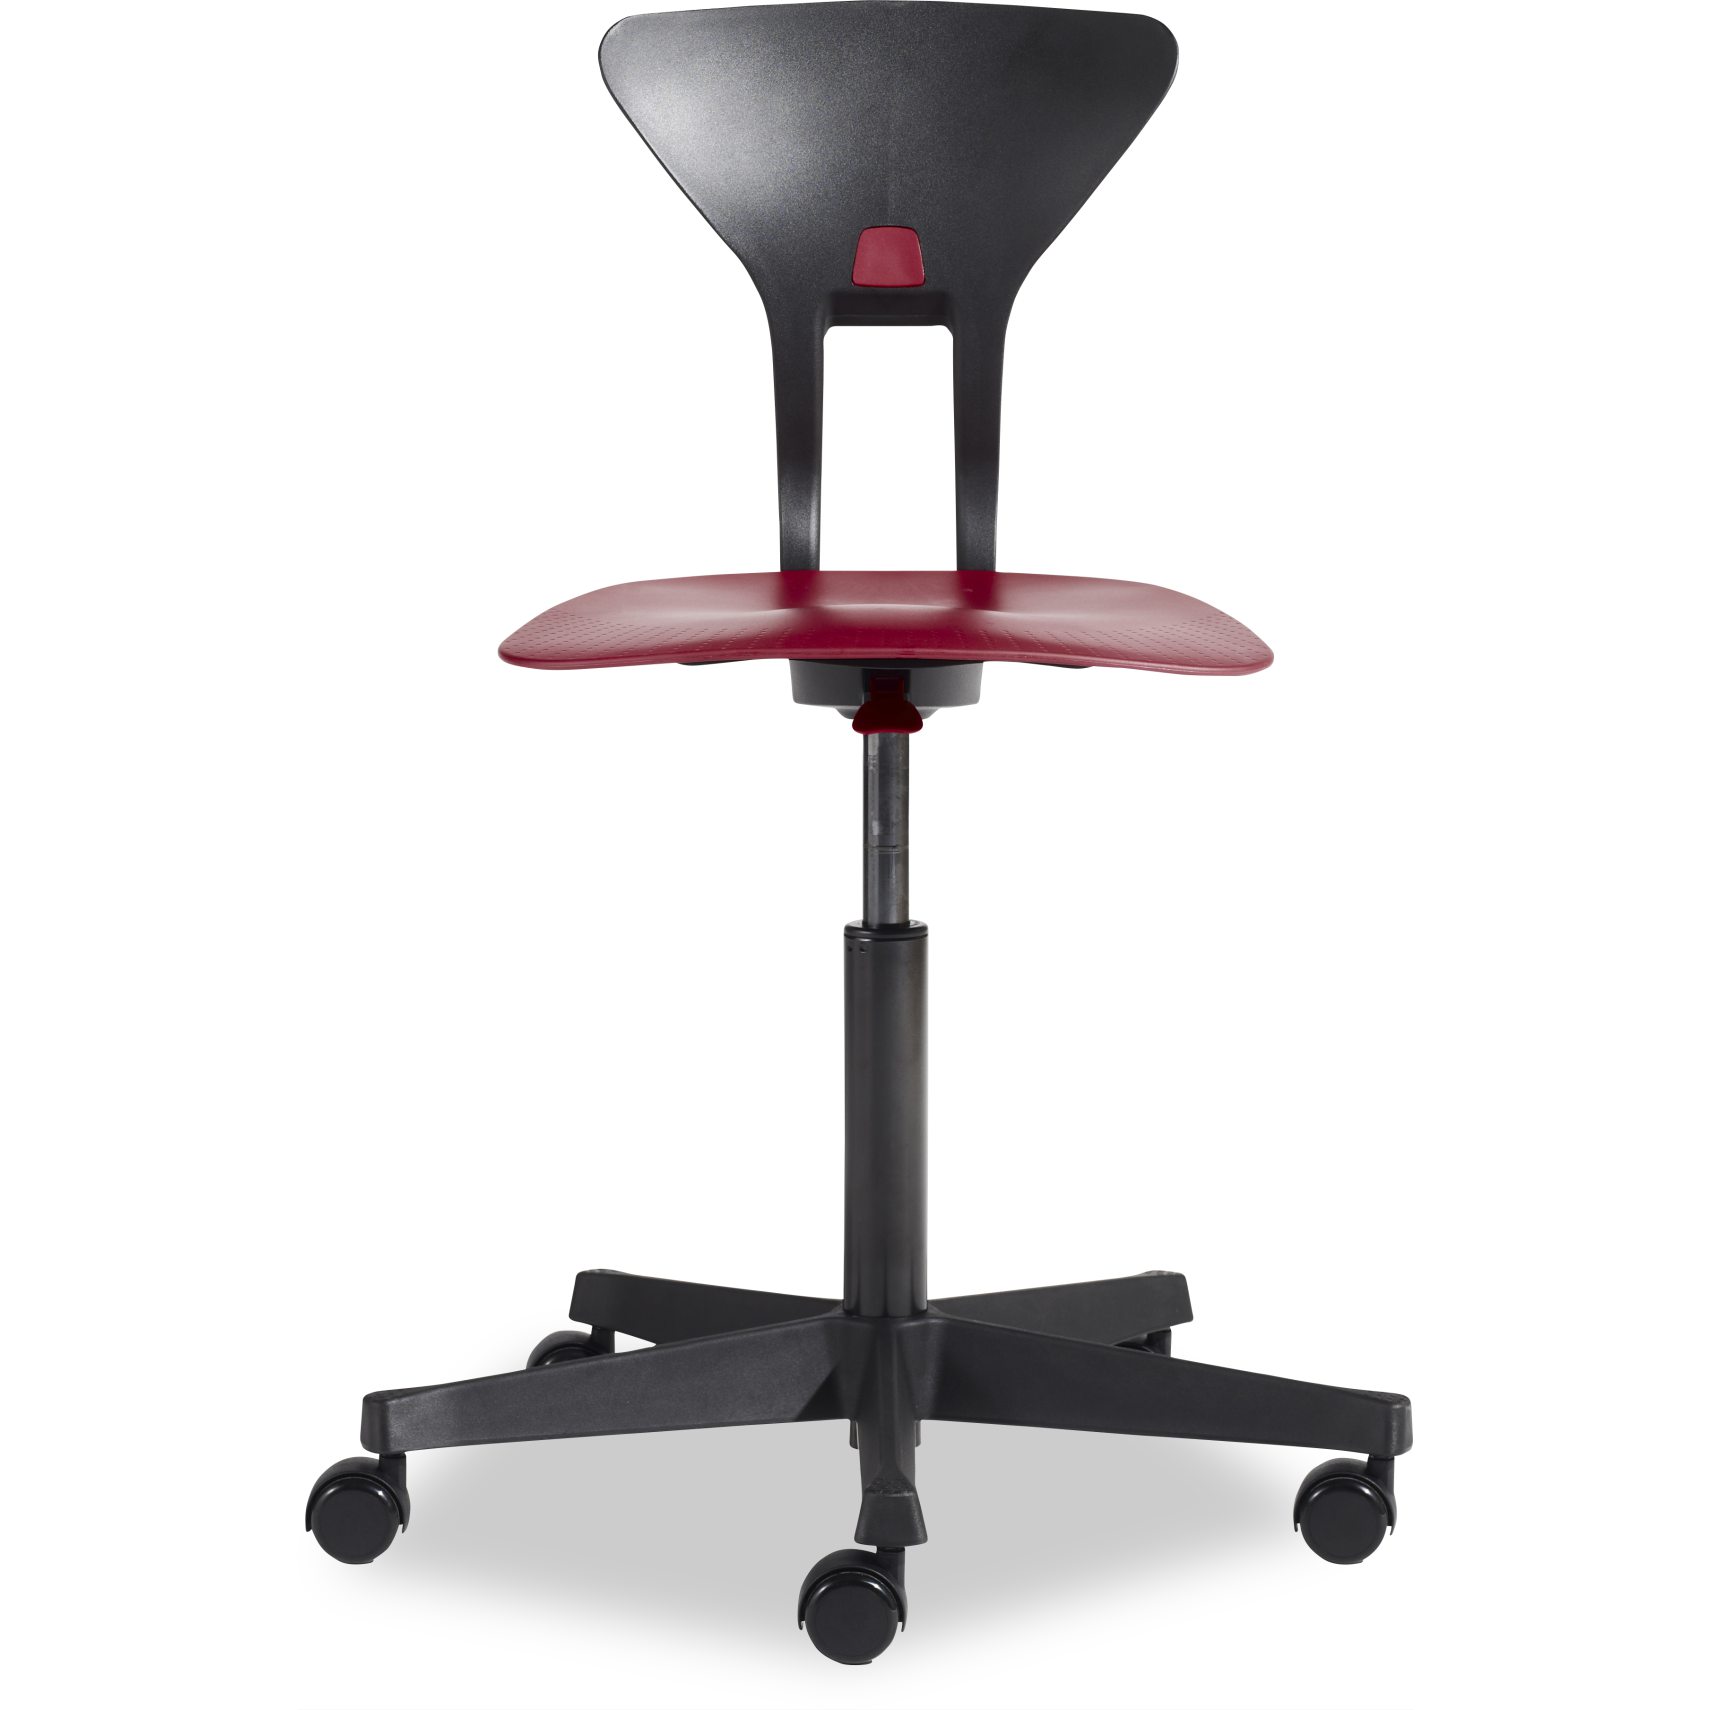 Flexa ray Kontorstol - Rød plastik sæde og sort stel